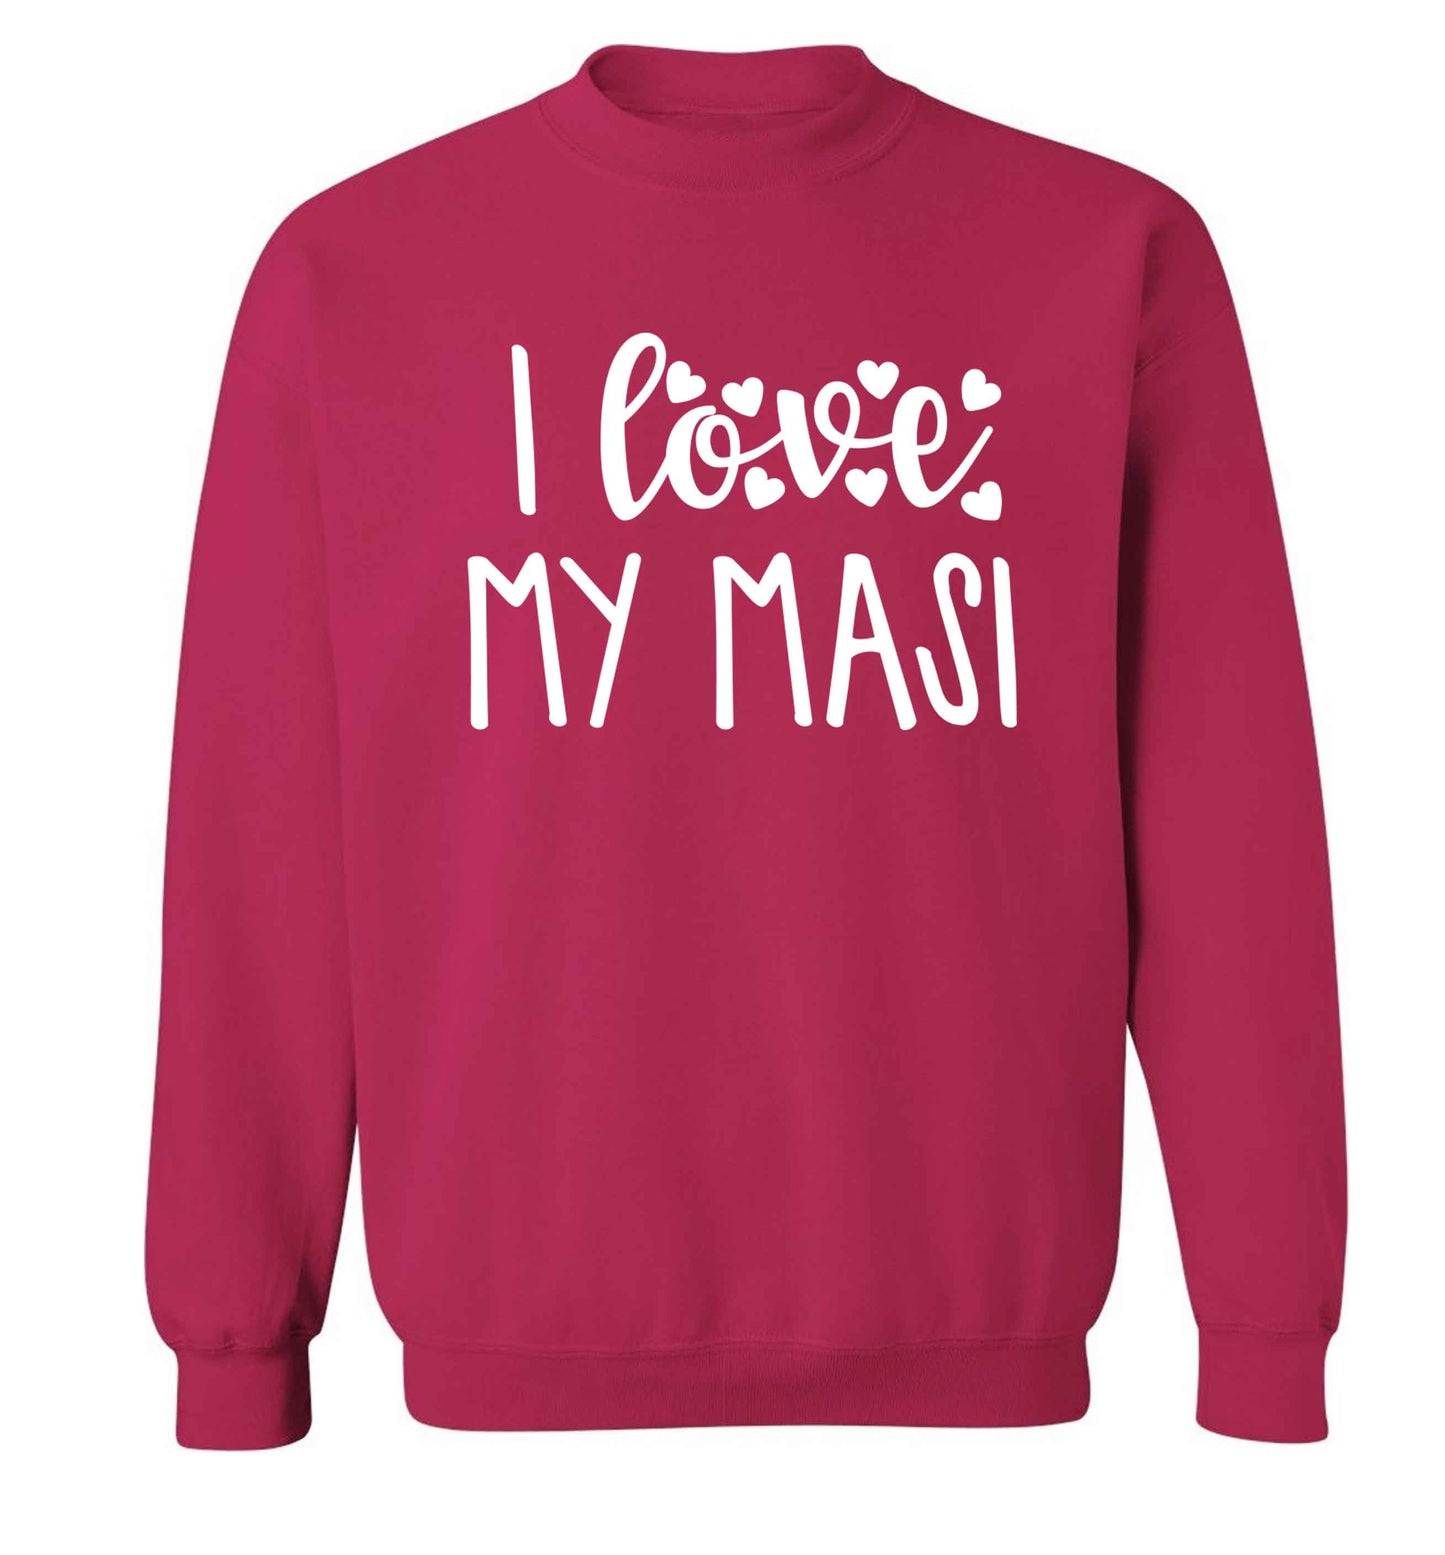 I love my masi Adult's unisex pink Sweater 2XL